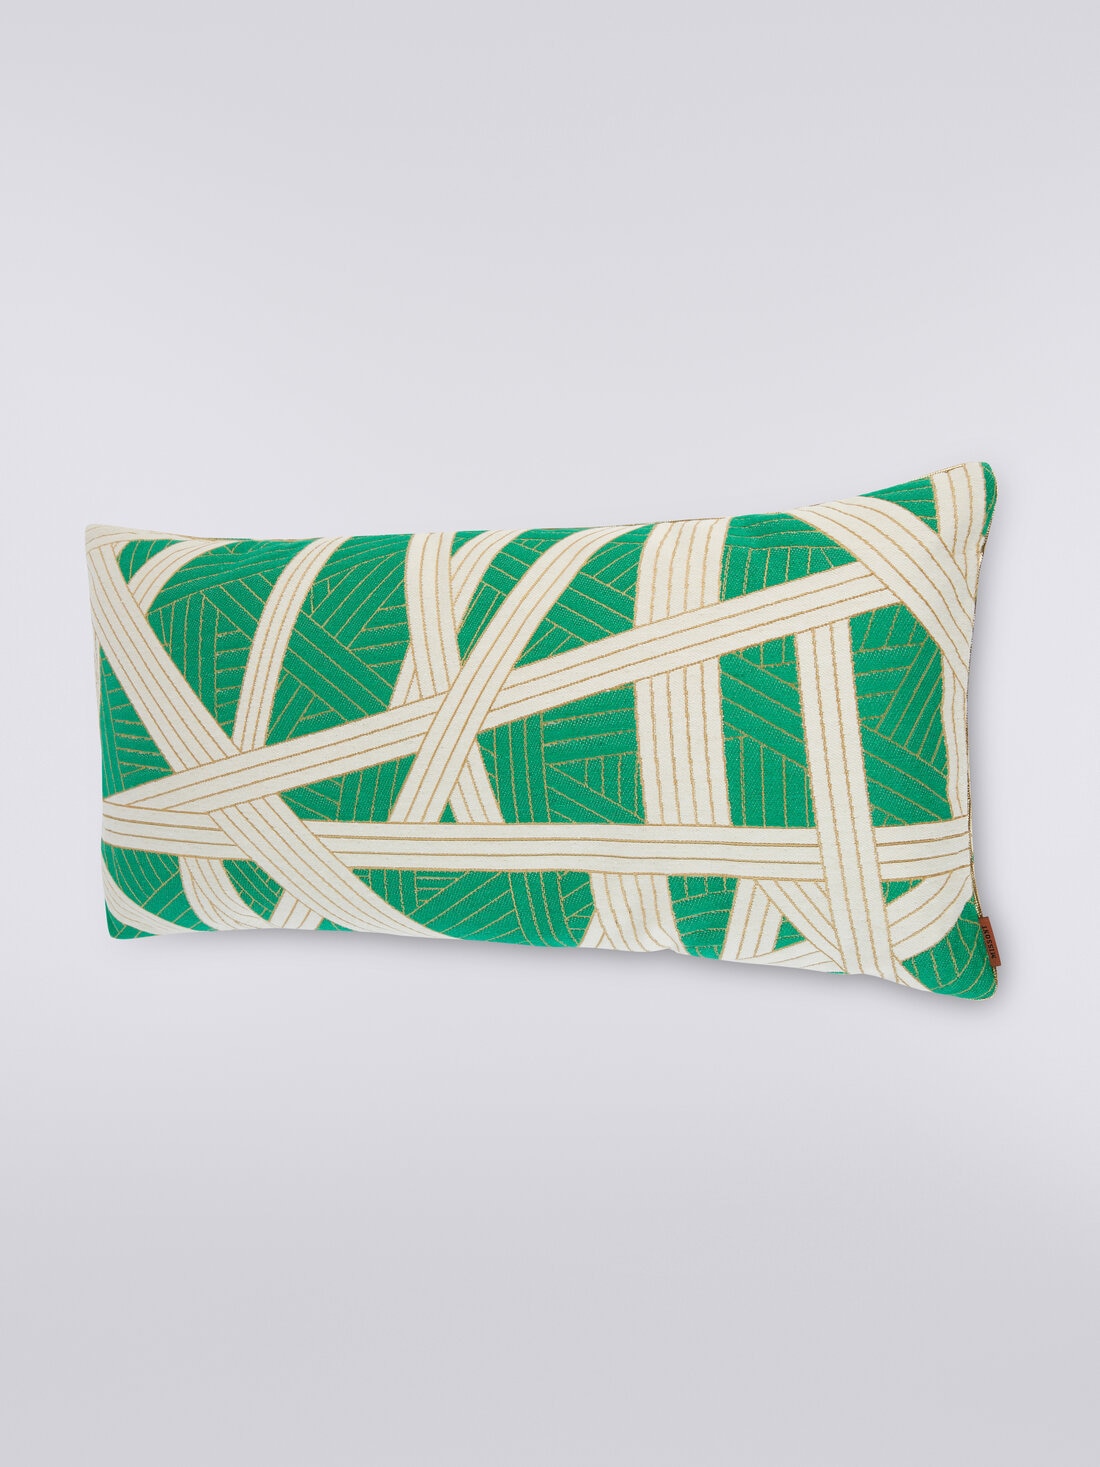 Nastri 30x60 cm cushion with stitching, Multicoloured  - 8051575830808 - 1